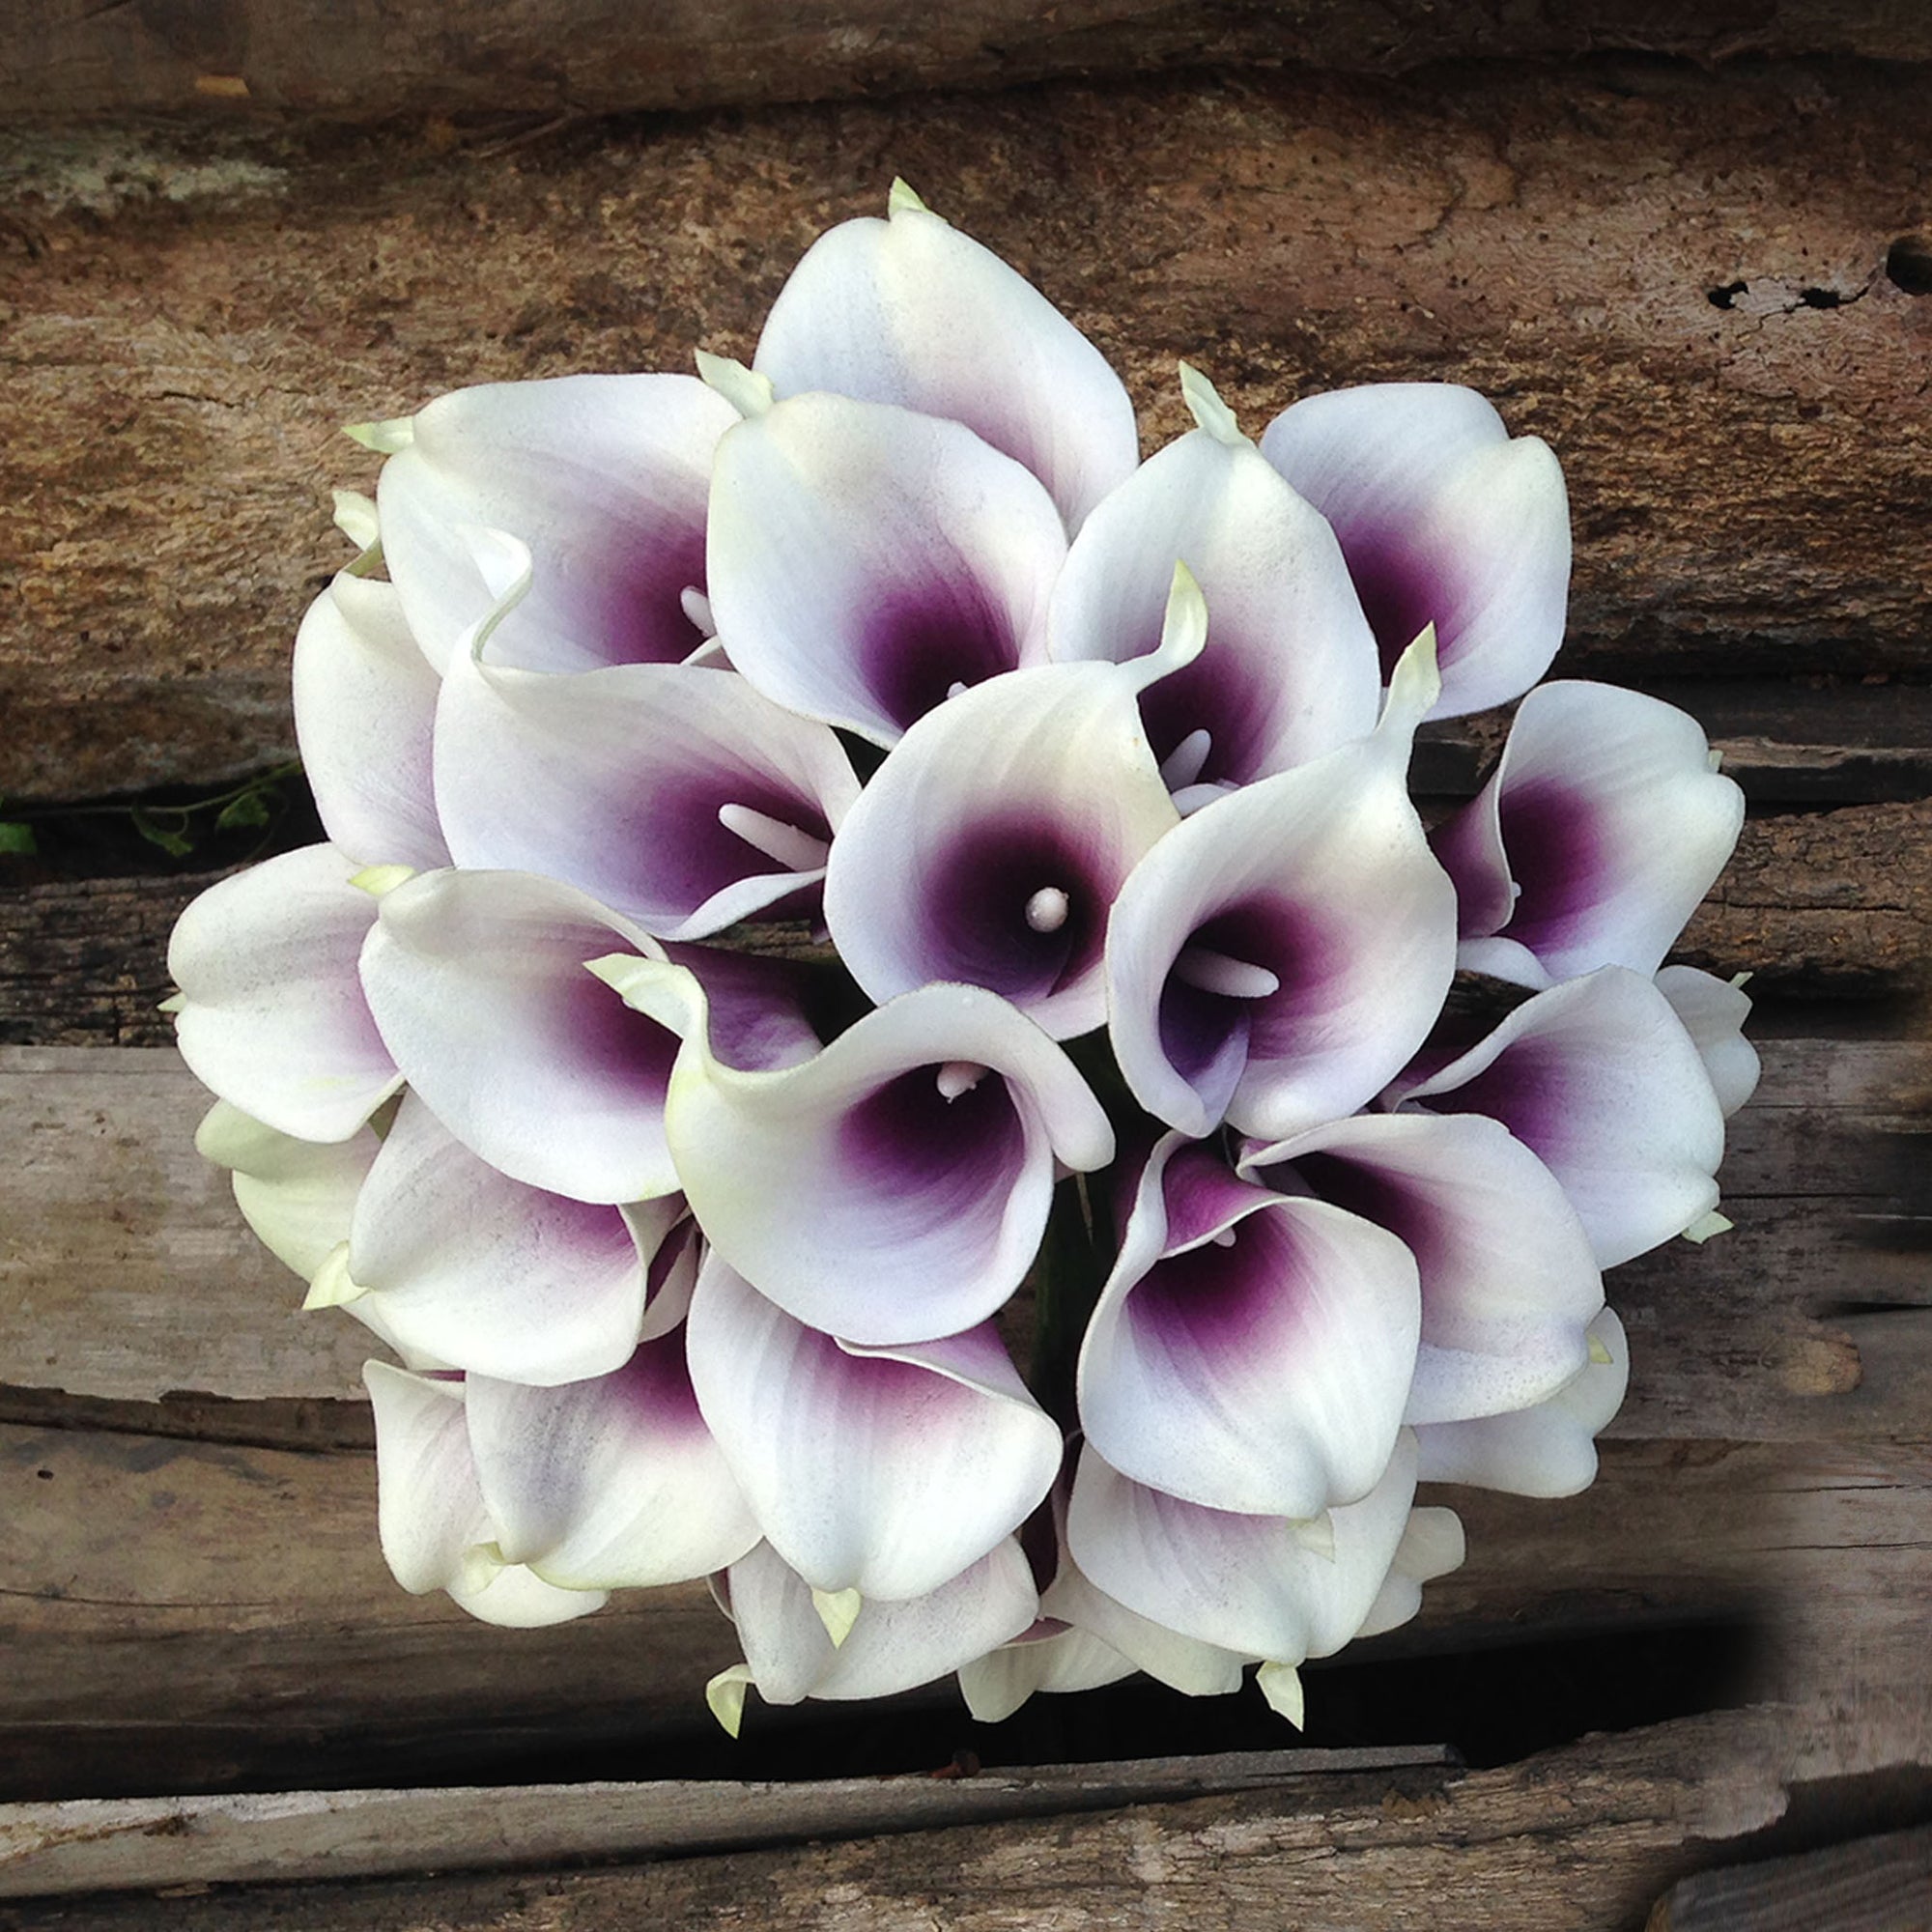 Picasso Purple Calla Lily Bouquet Plum Wedding Flowers